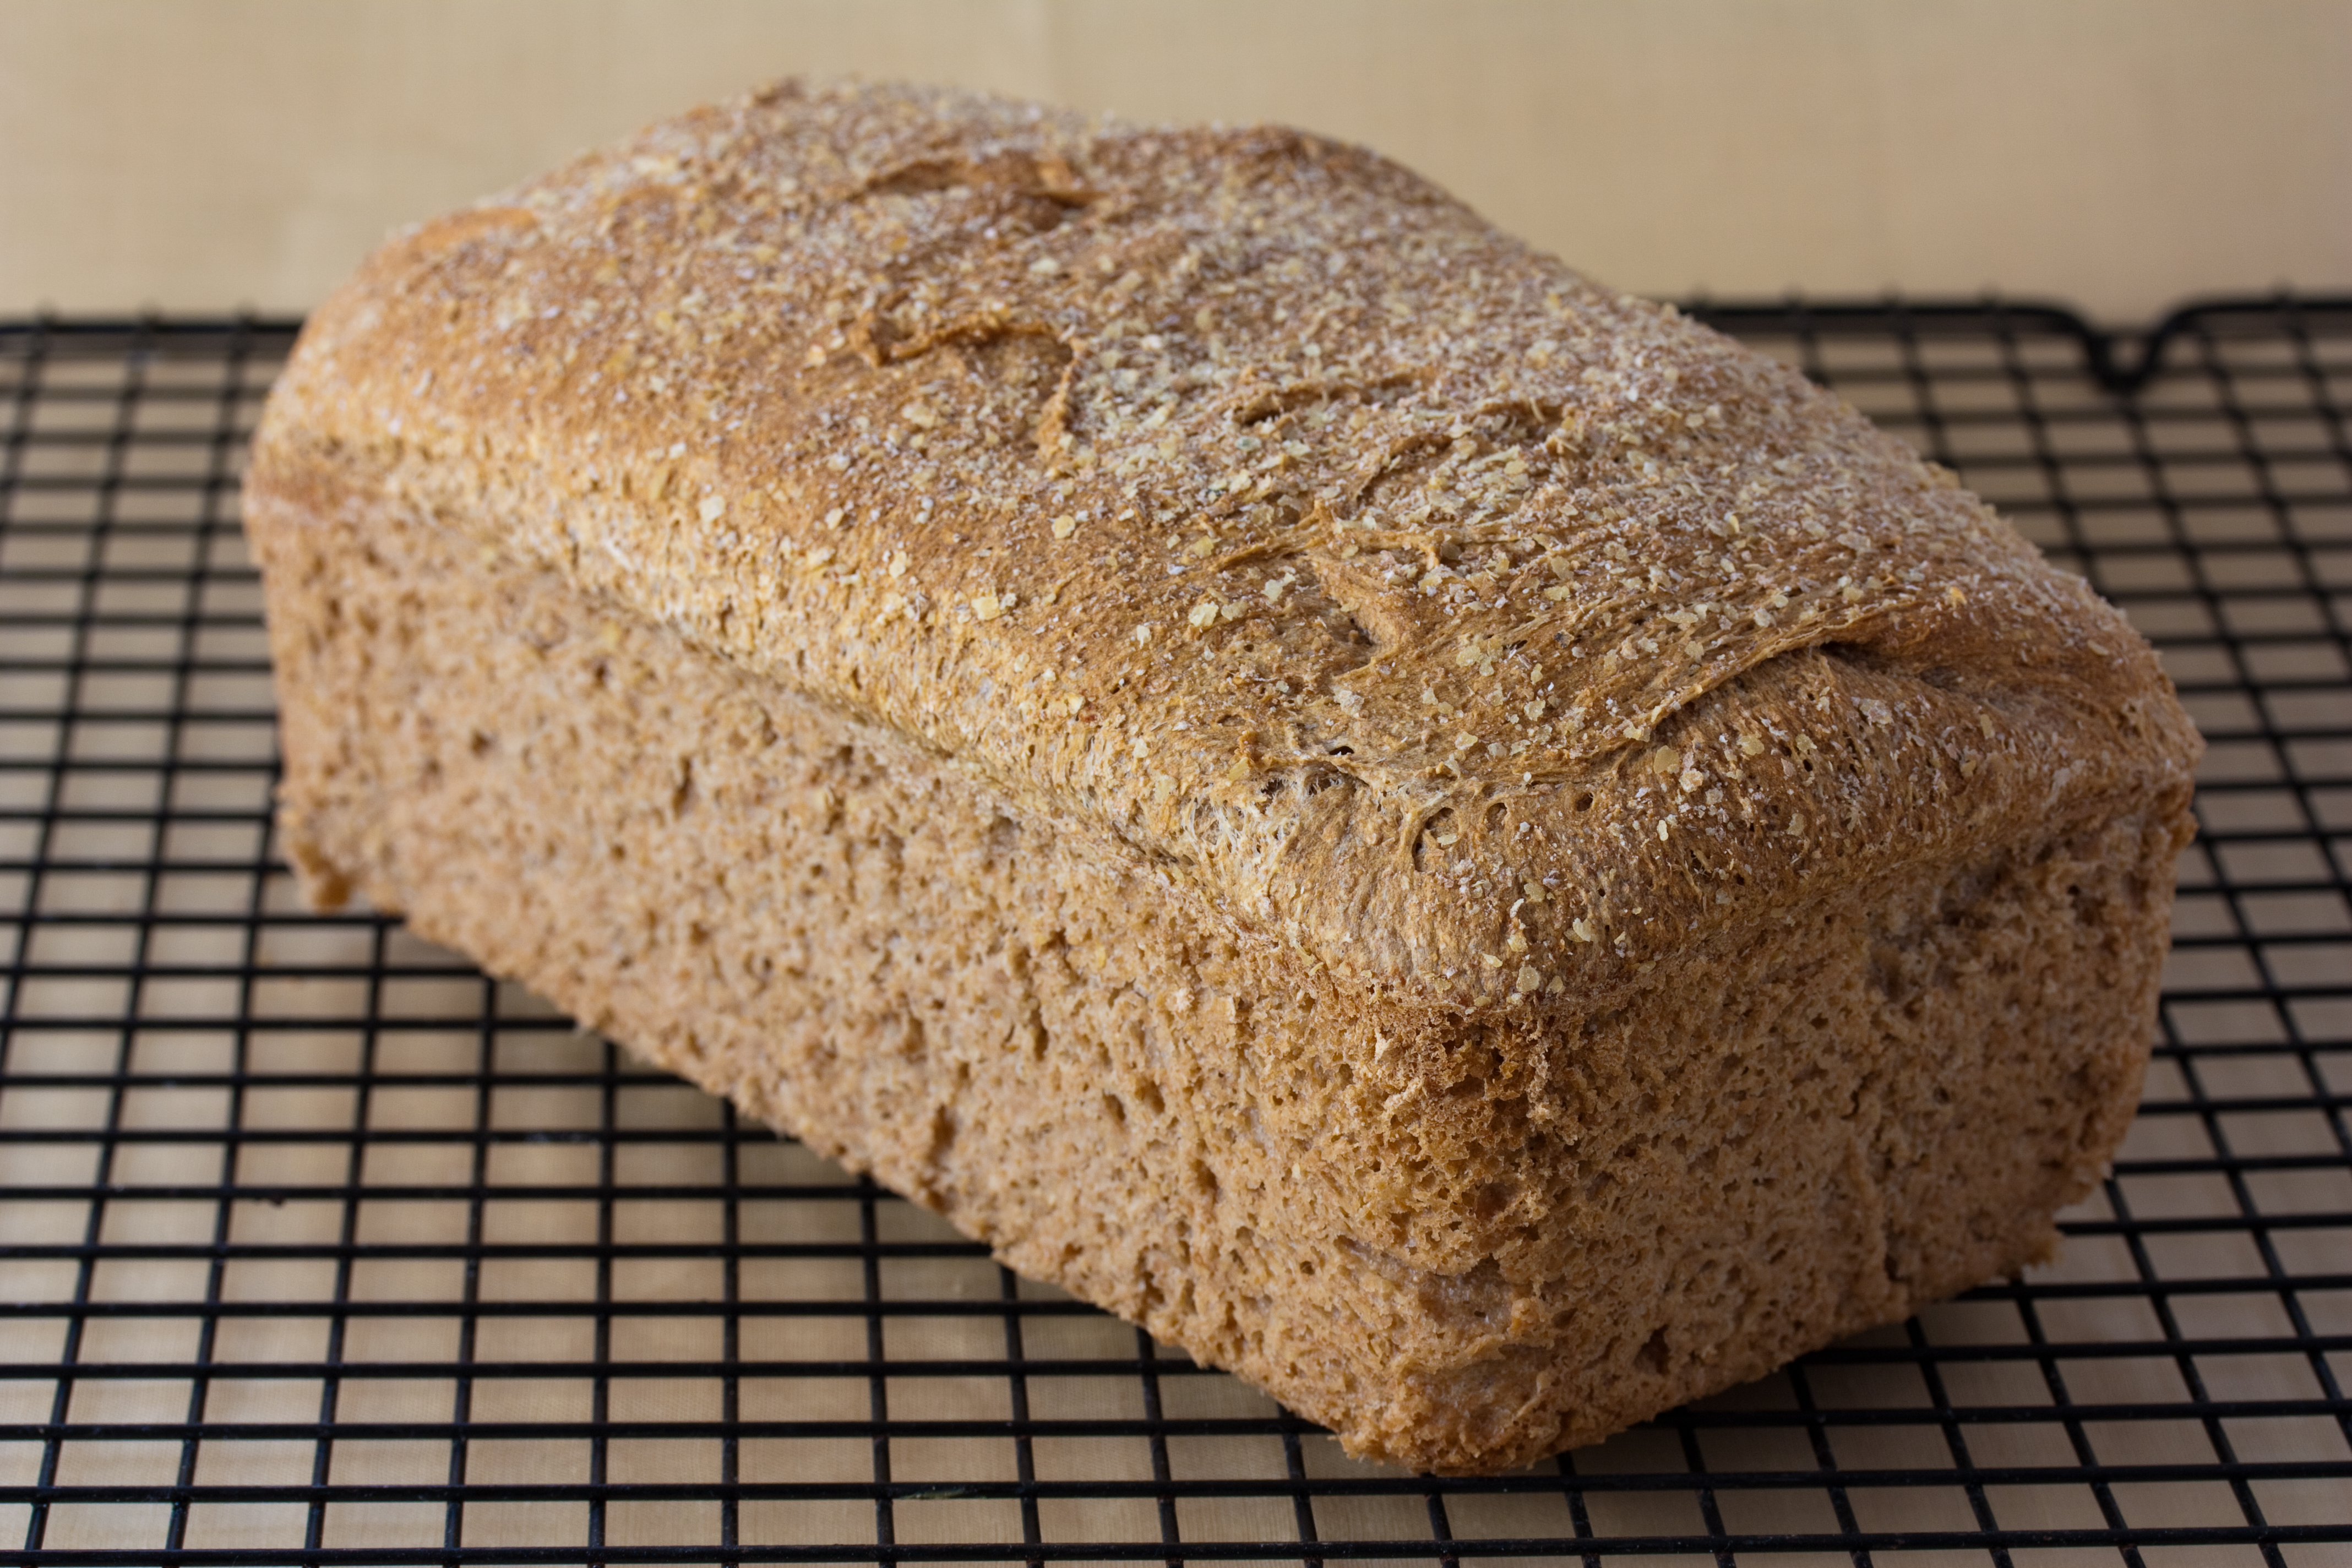 Whole wheat bread - Wikipedia